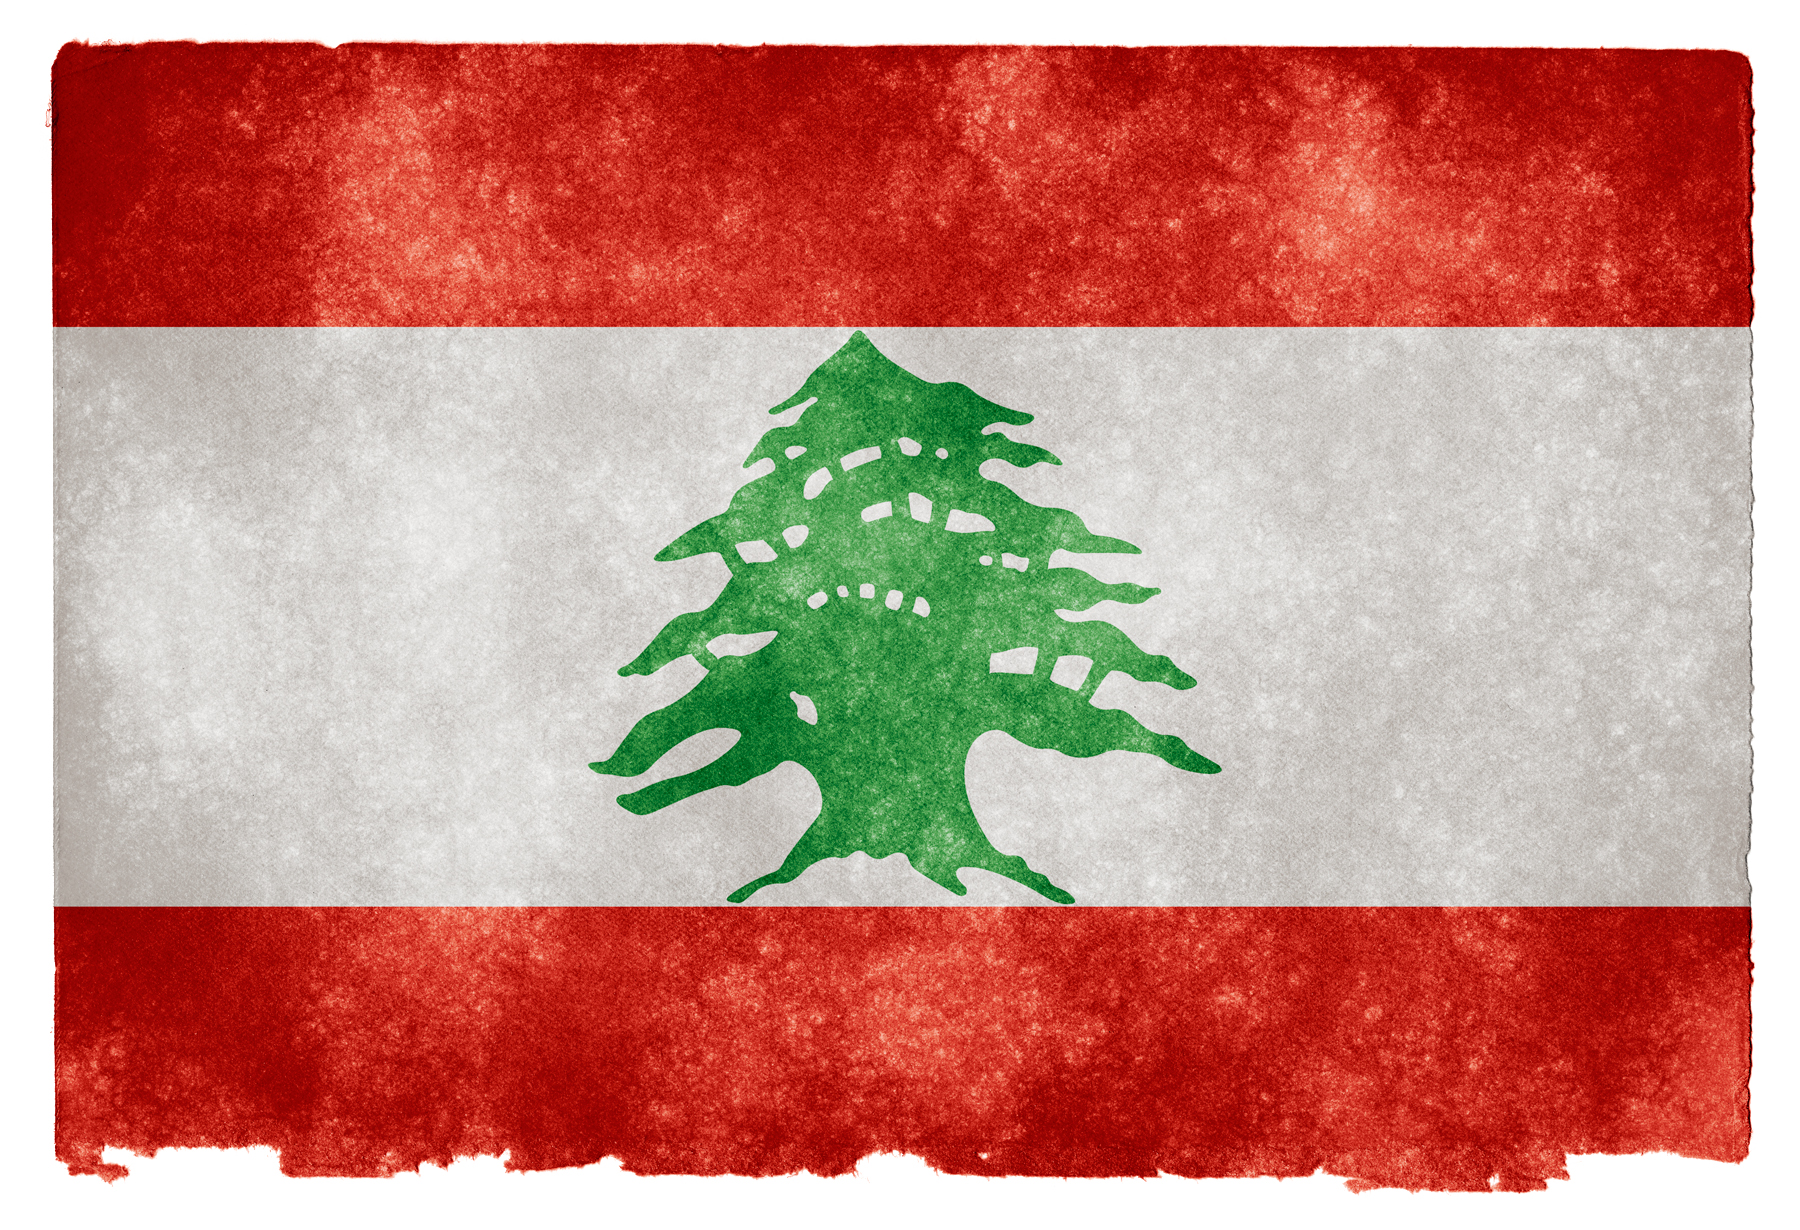 Lebanon grunge flag photo